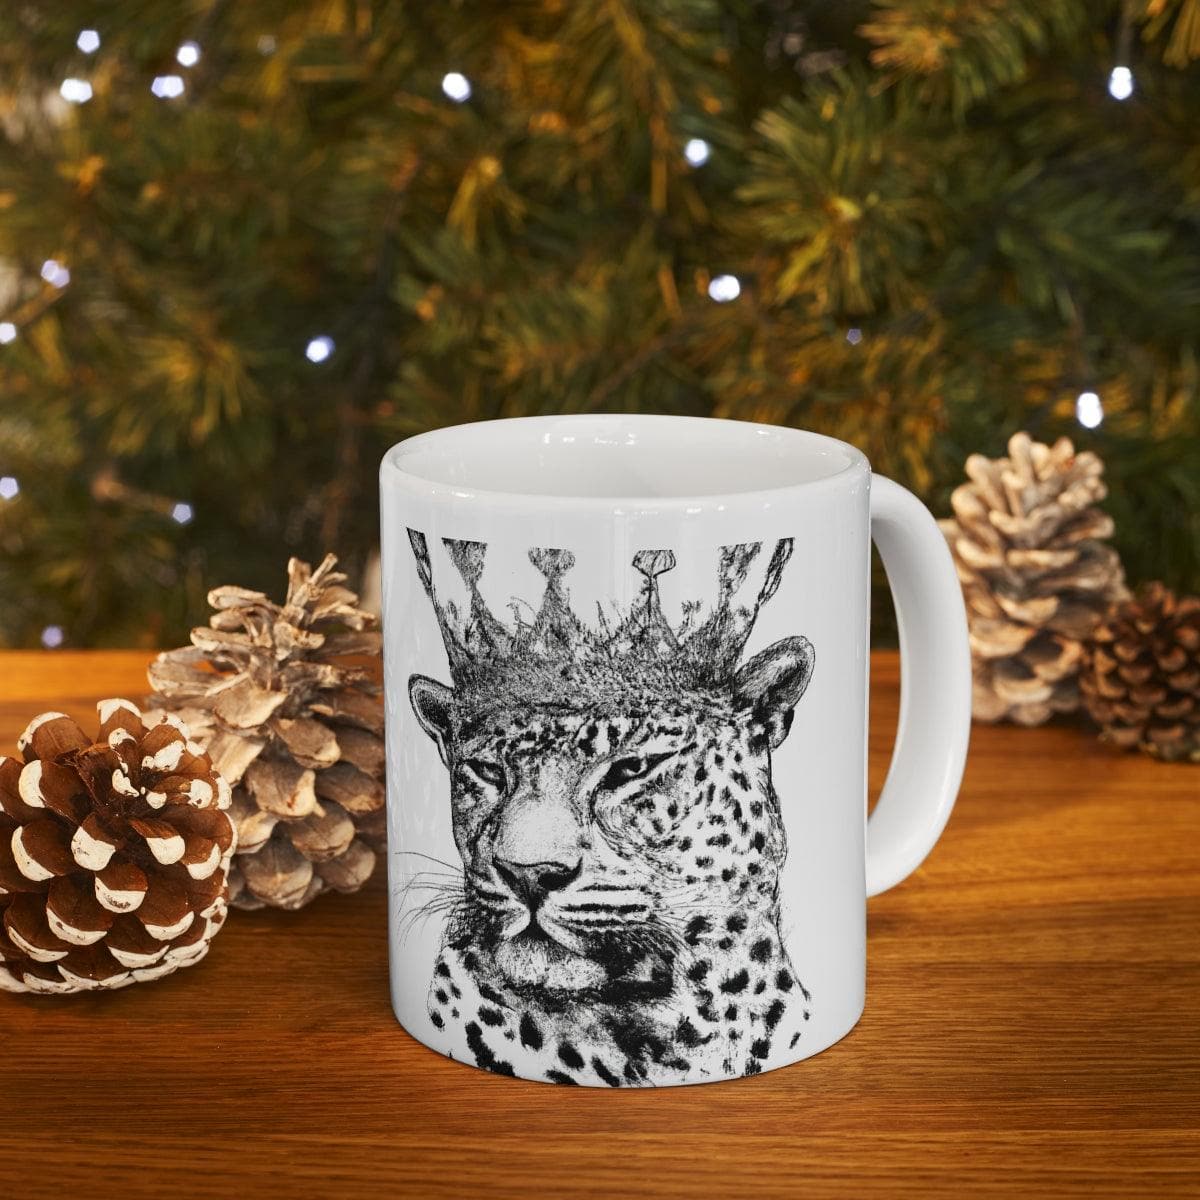 Black and White Crown Leopard Ceramic Mug - MAIA HOMES